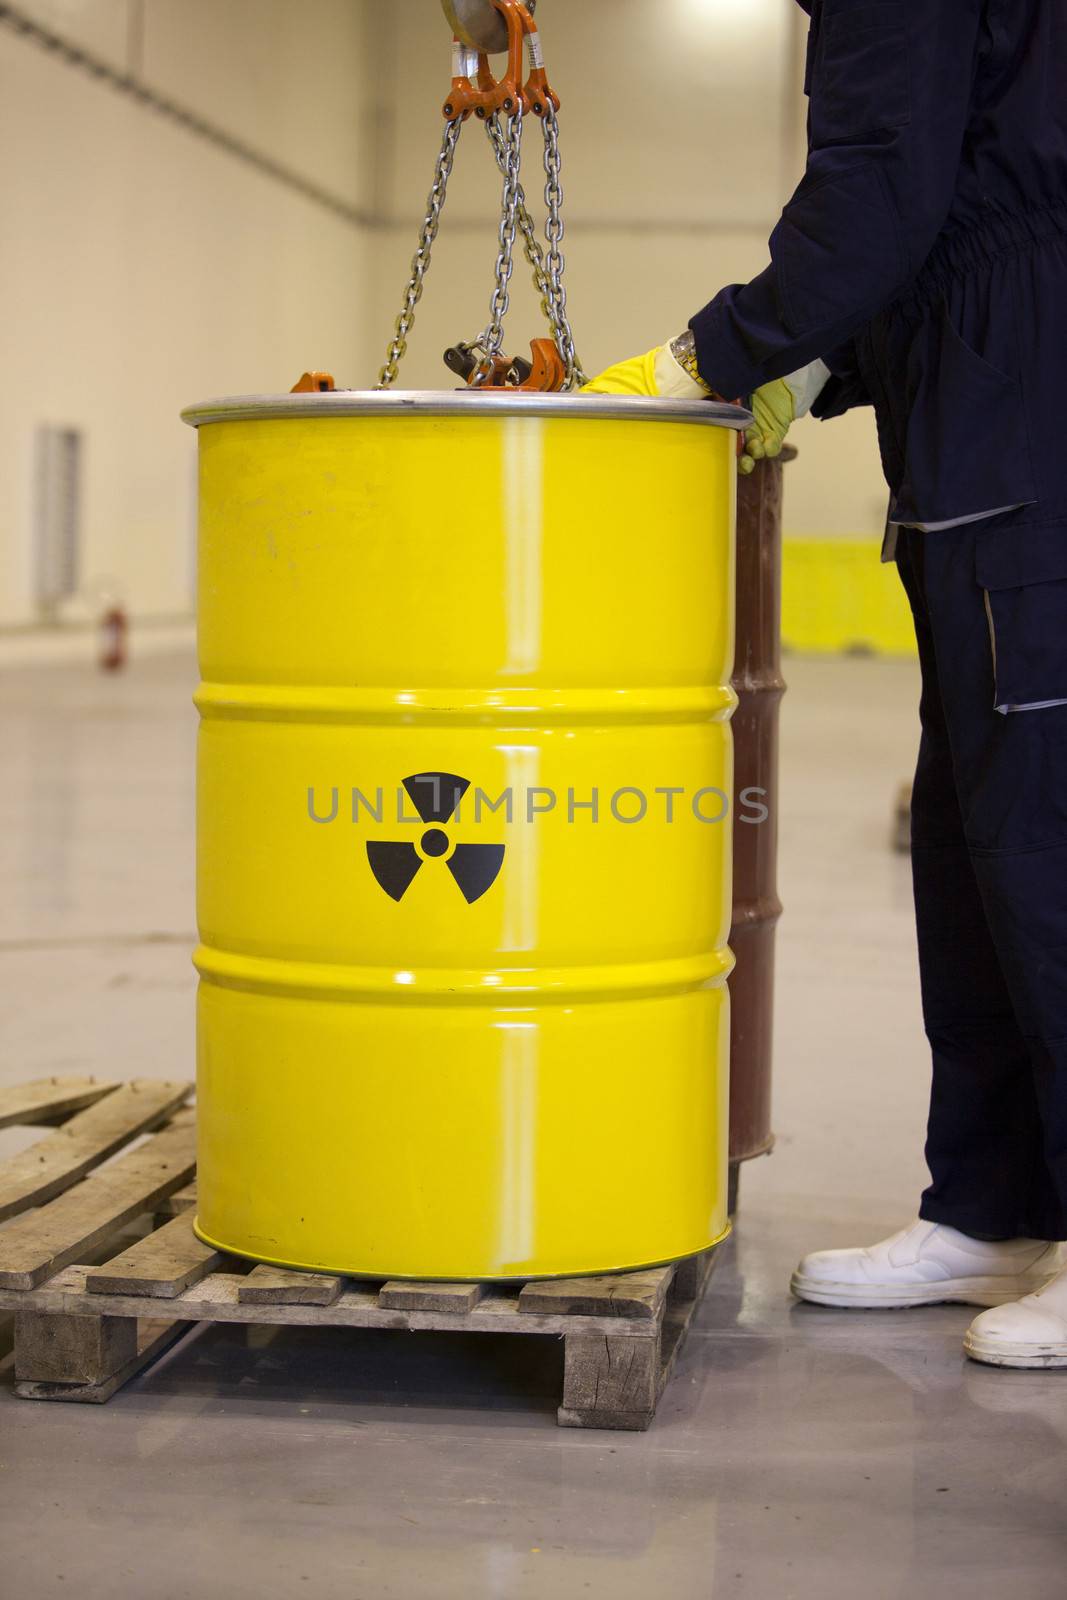 Radioactive waste by wellphoto